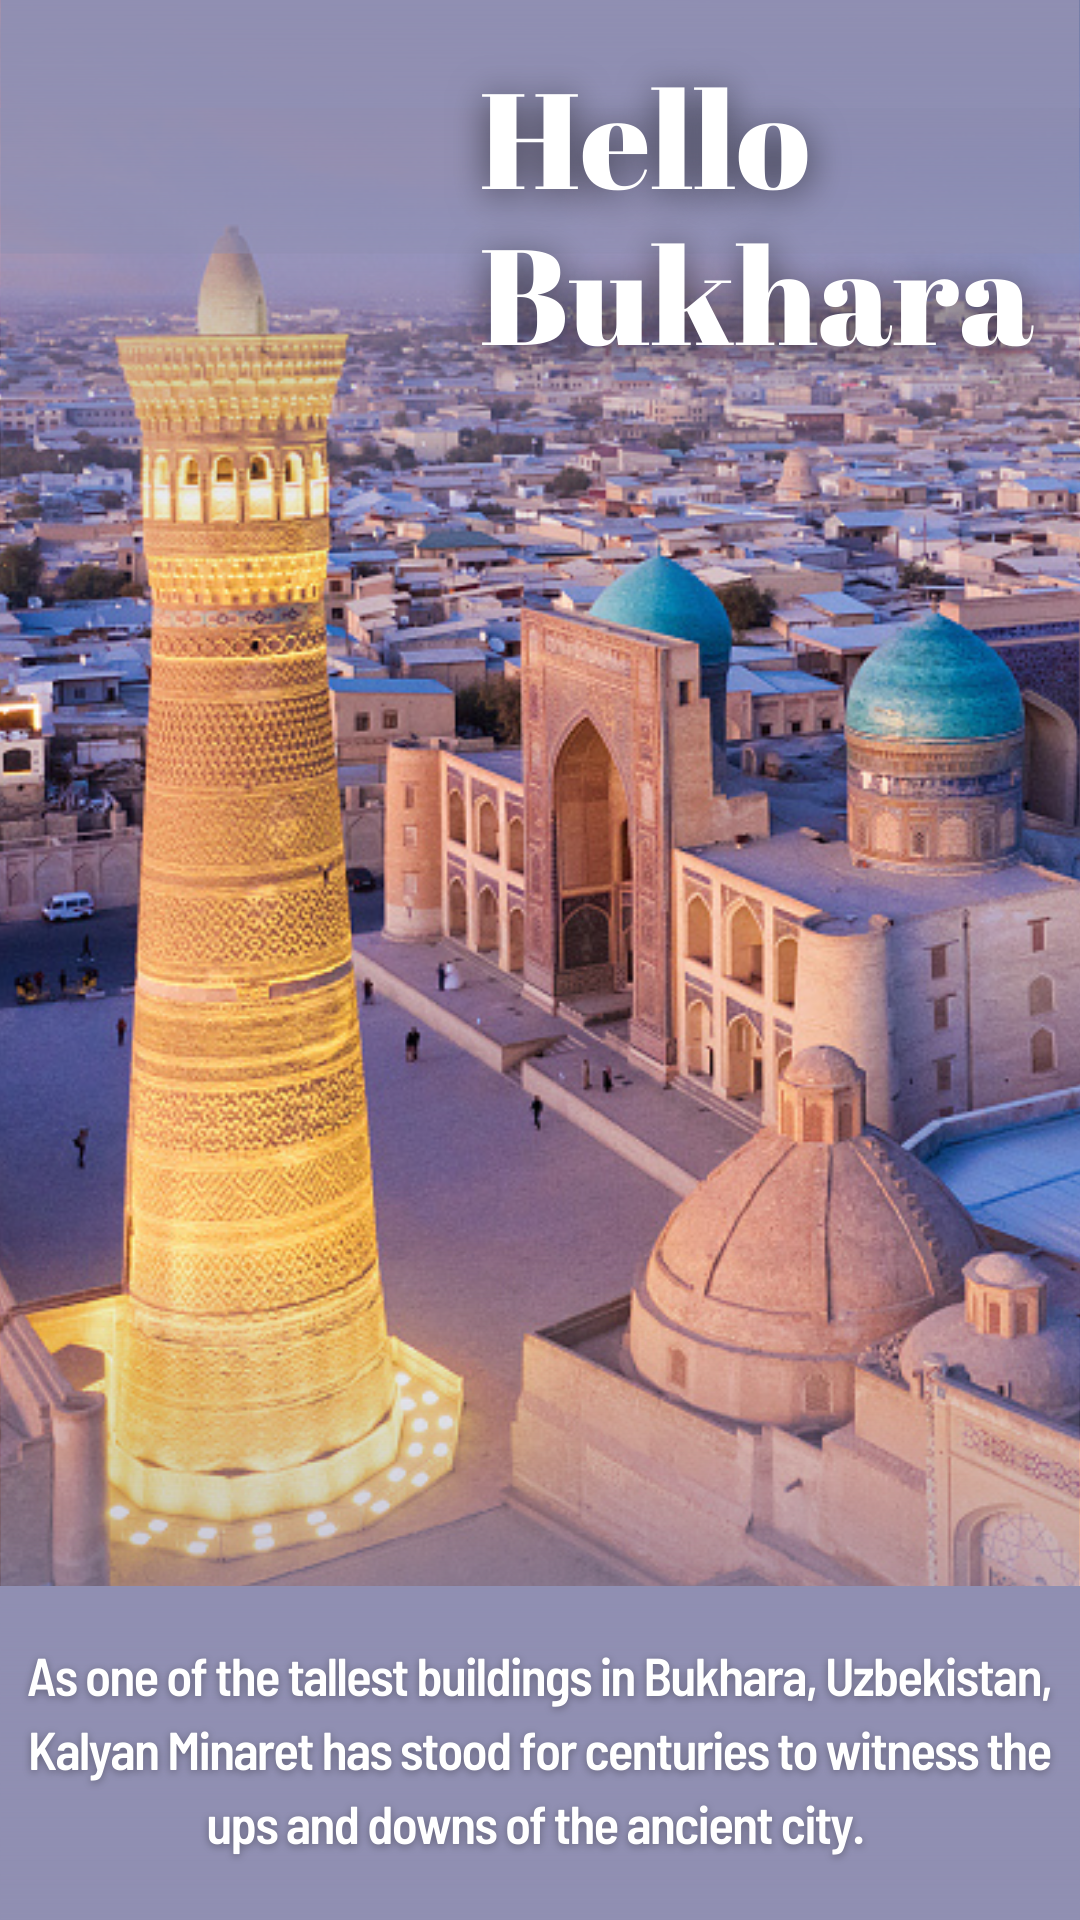 Kalyan Minaret: a symbol of past centuries in Uzbekistan